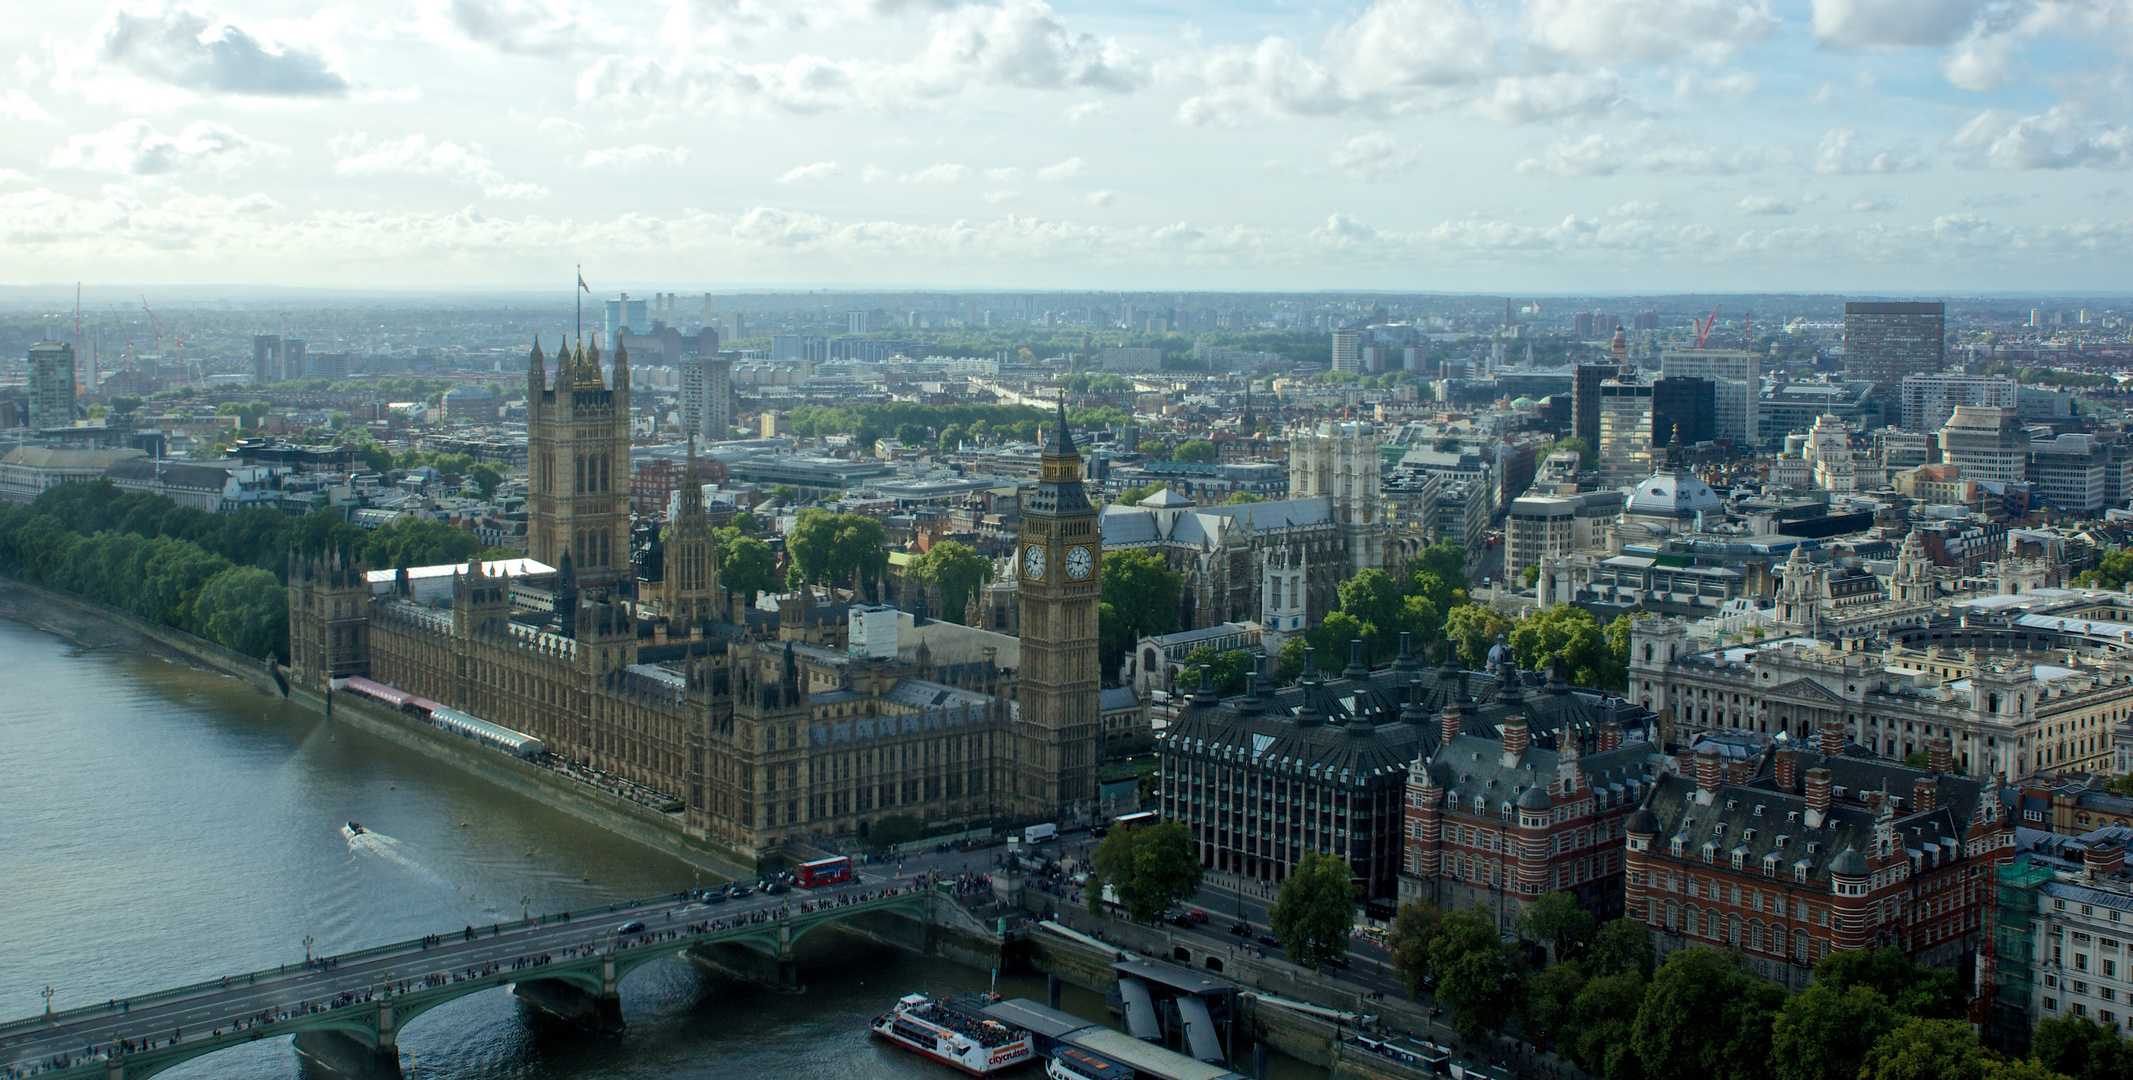 House of Parlament / Big Ben vom London Eye